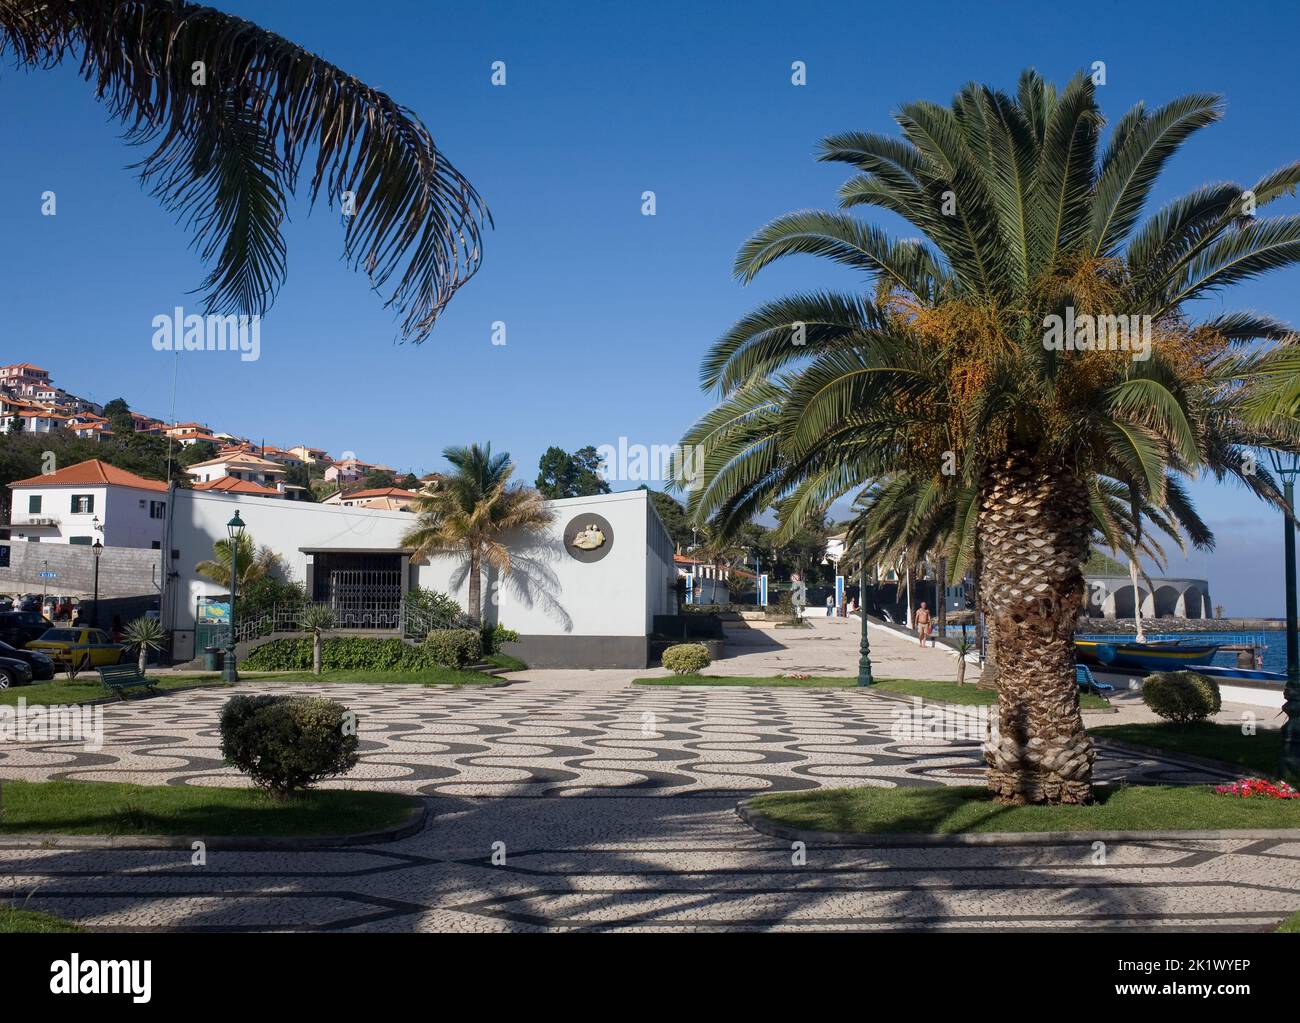 park with palm trees and decorative paved tiles adjacent to Palmeiras beach in Santa Cruz Madeira Stock Photo